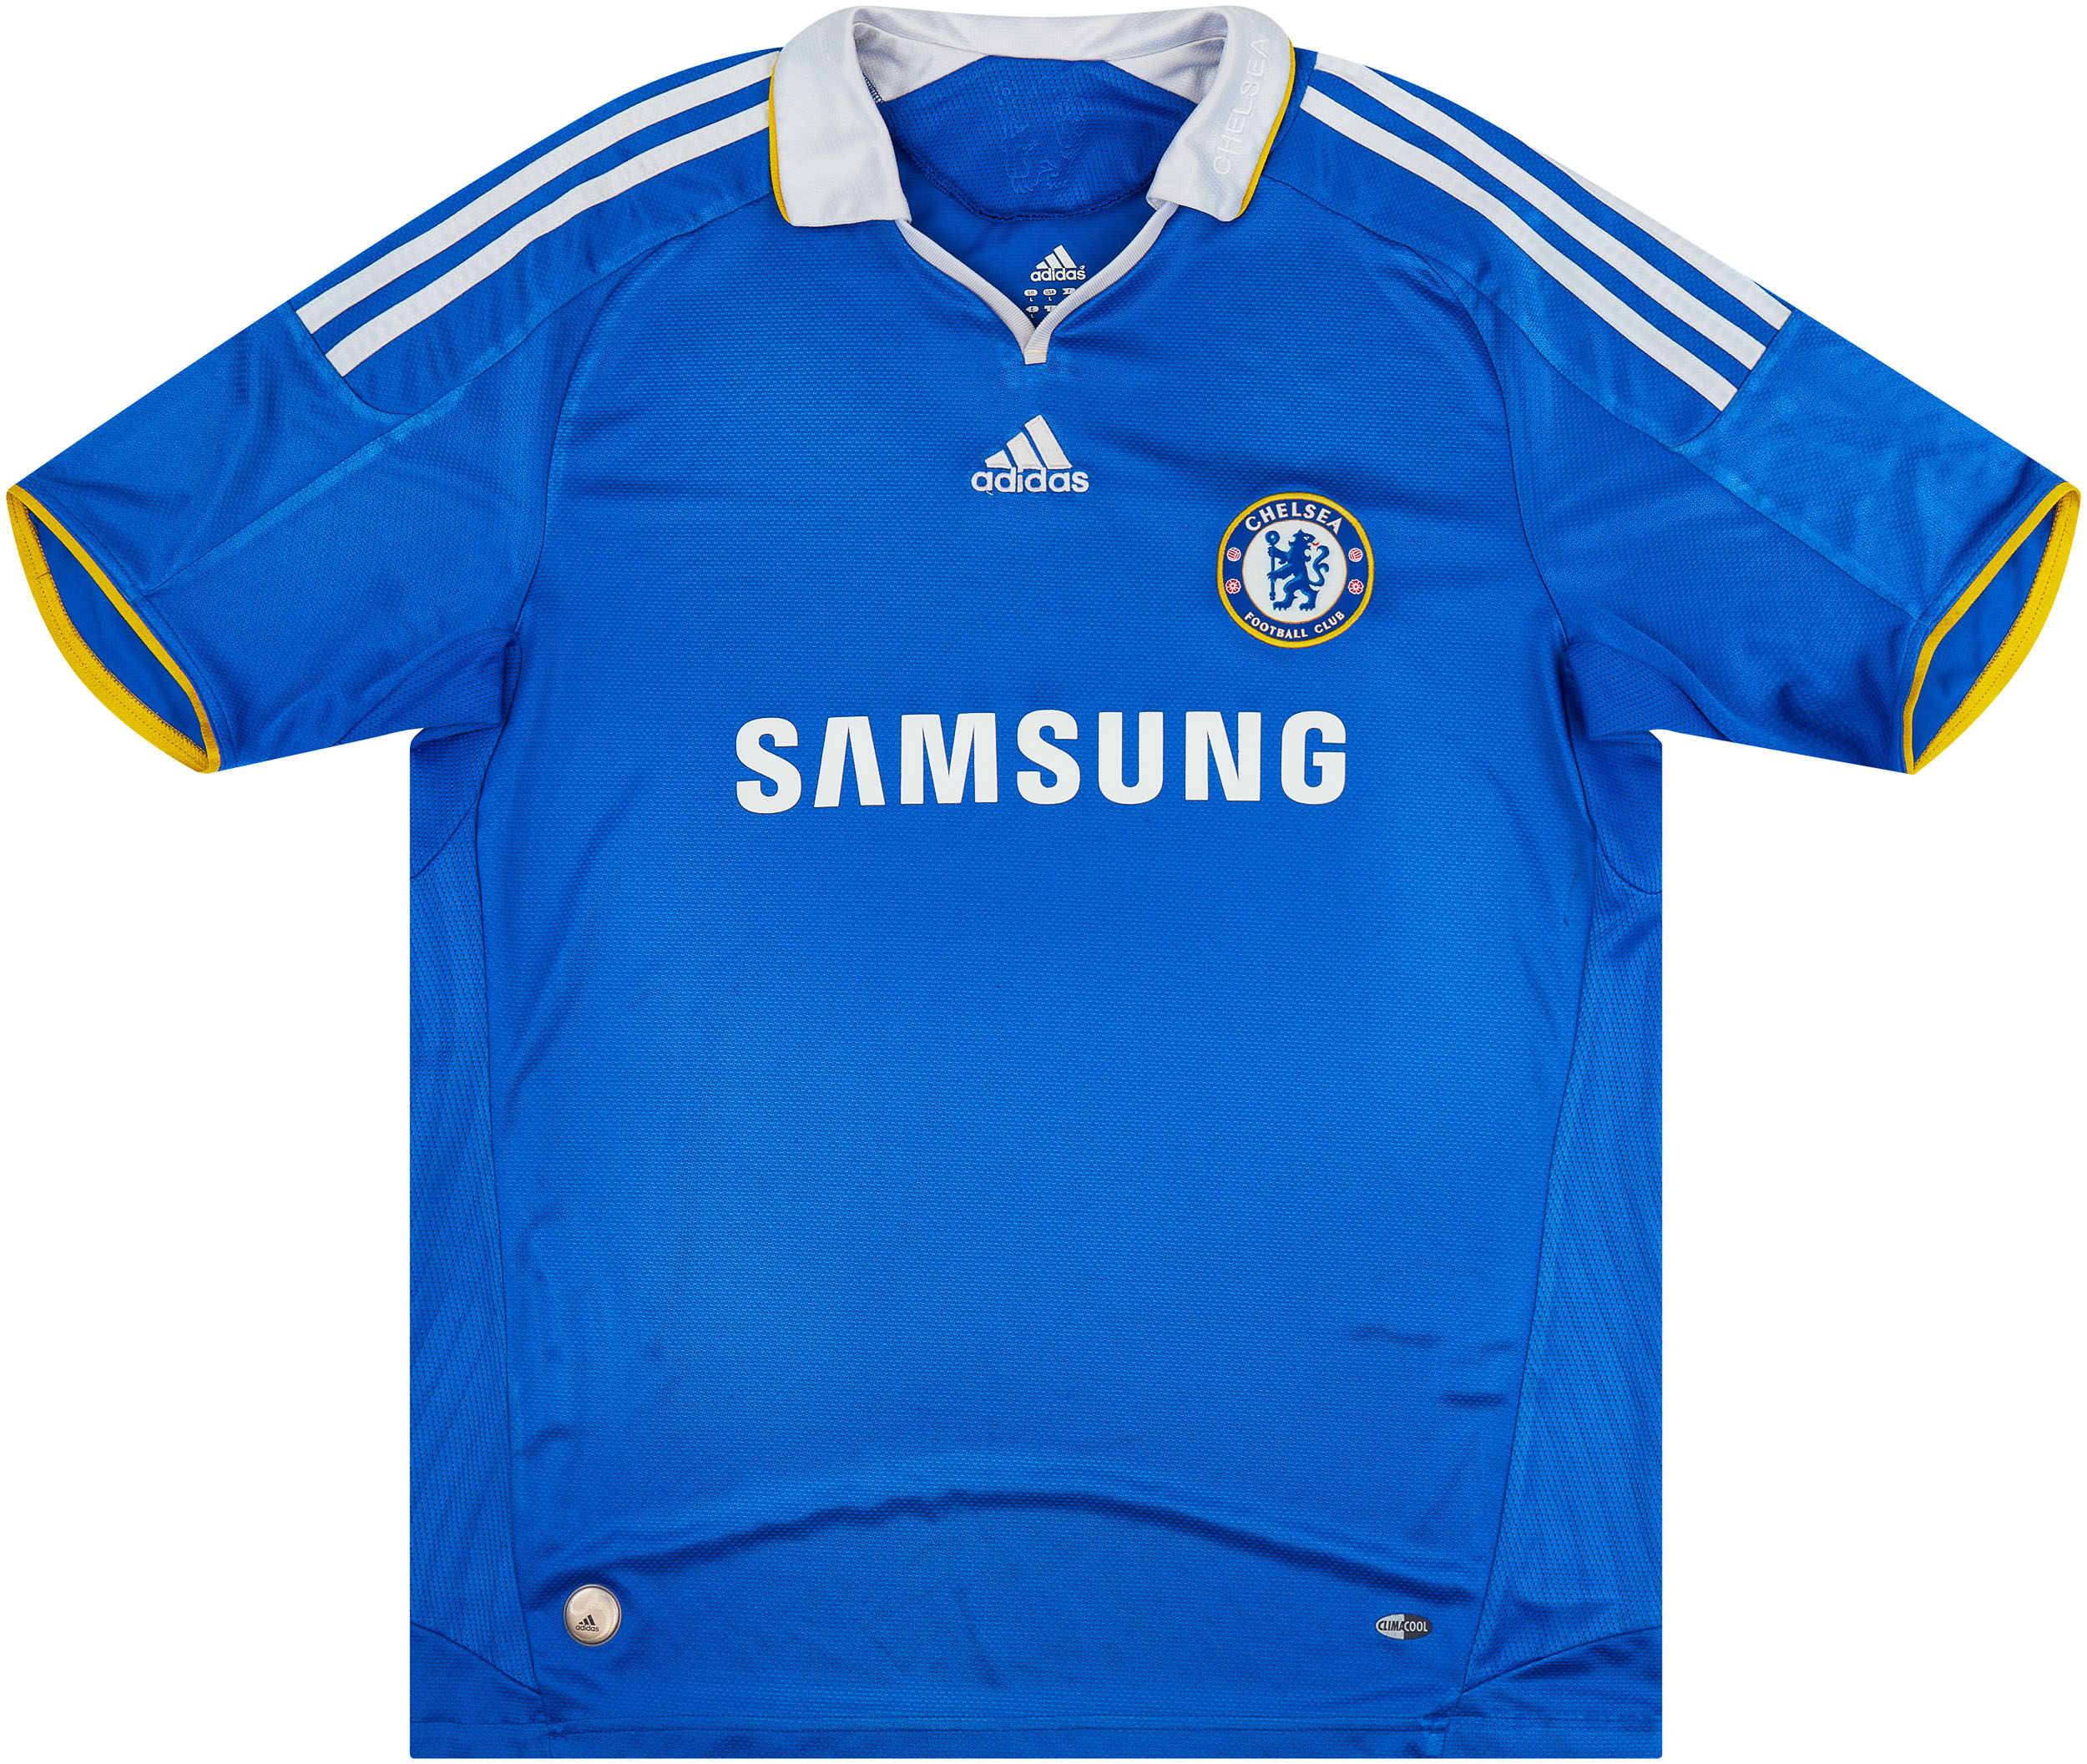 2008-09 Chelsea Home Shirt - Good 5/10 - ()